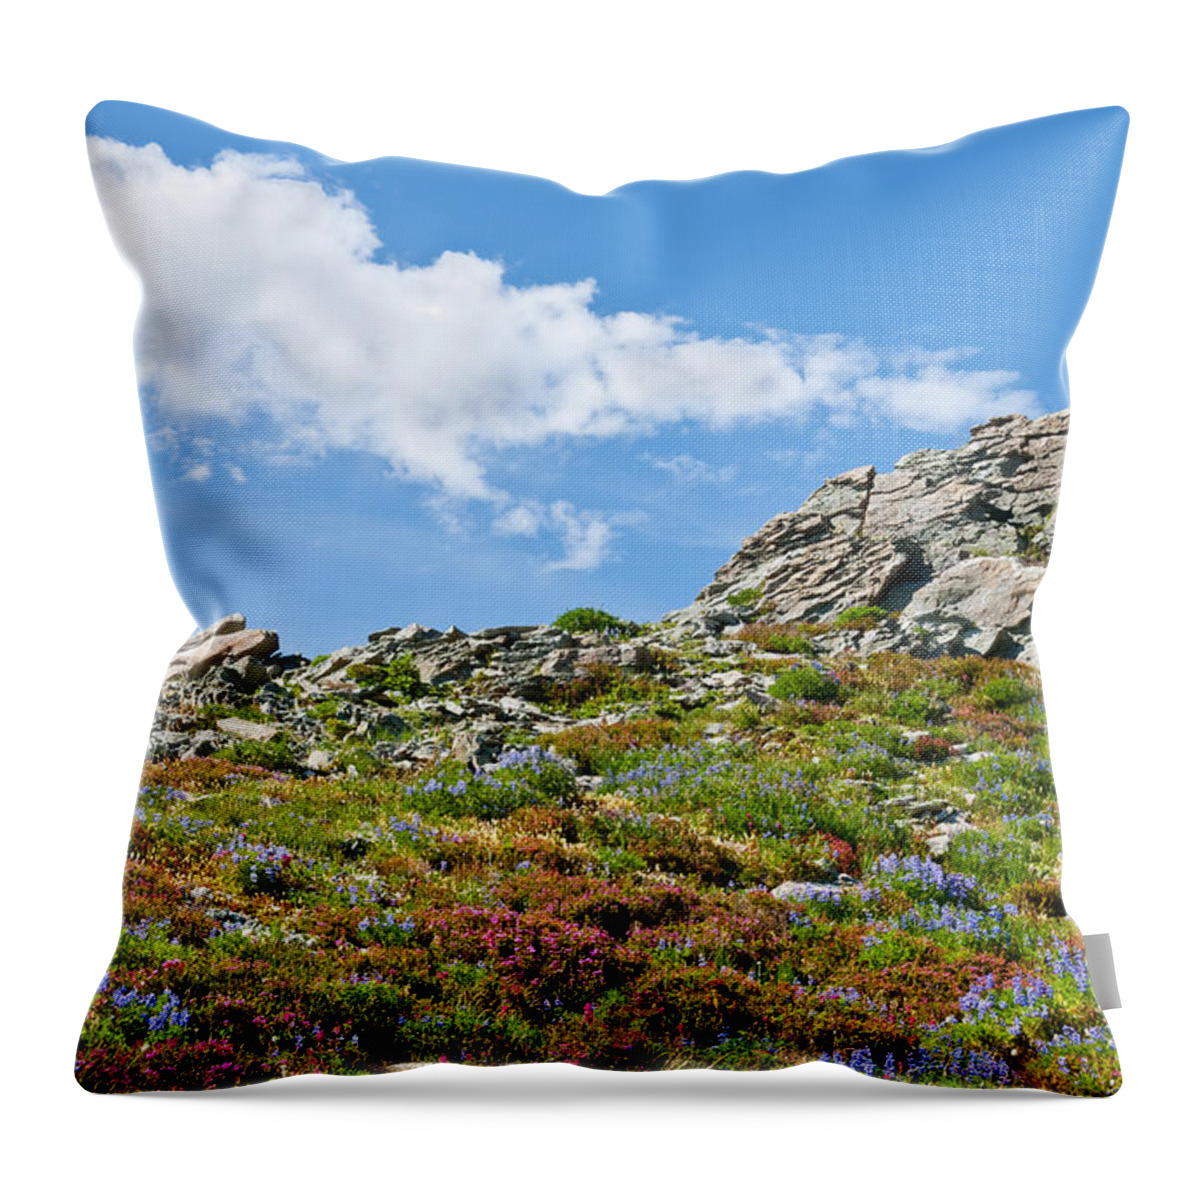 Alpine Throw Pillow featuring the photograph Alpine Rock Garden by Jeff Goulden